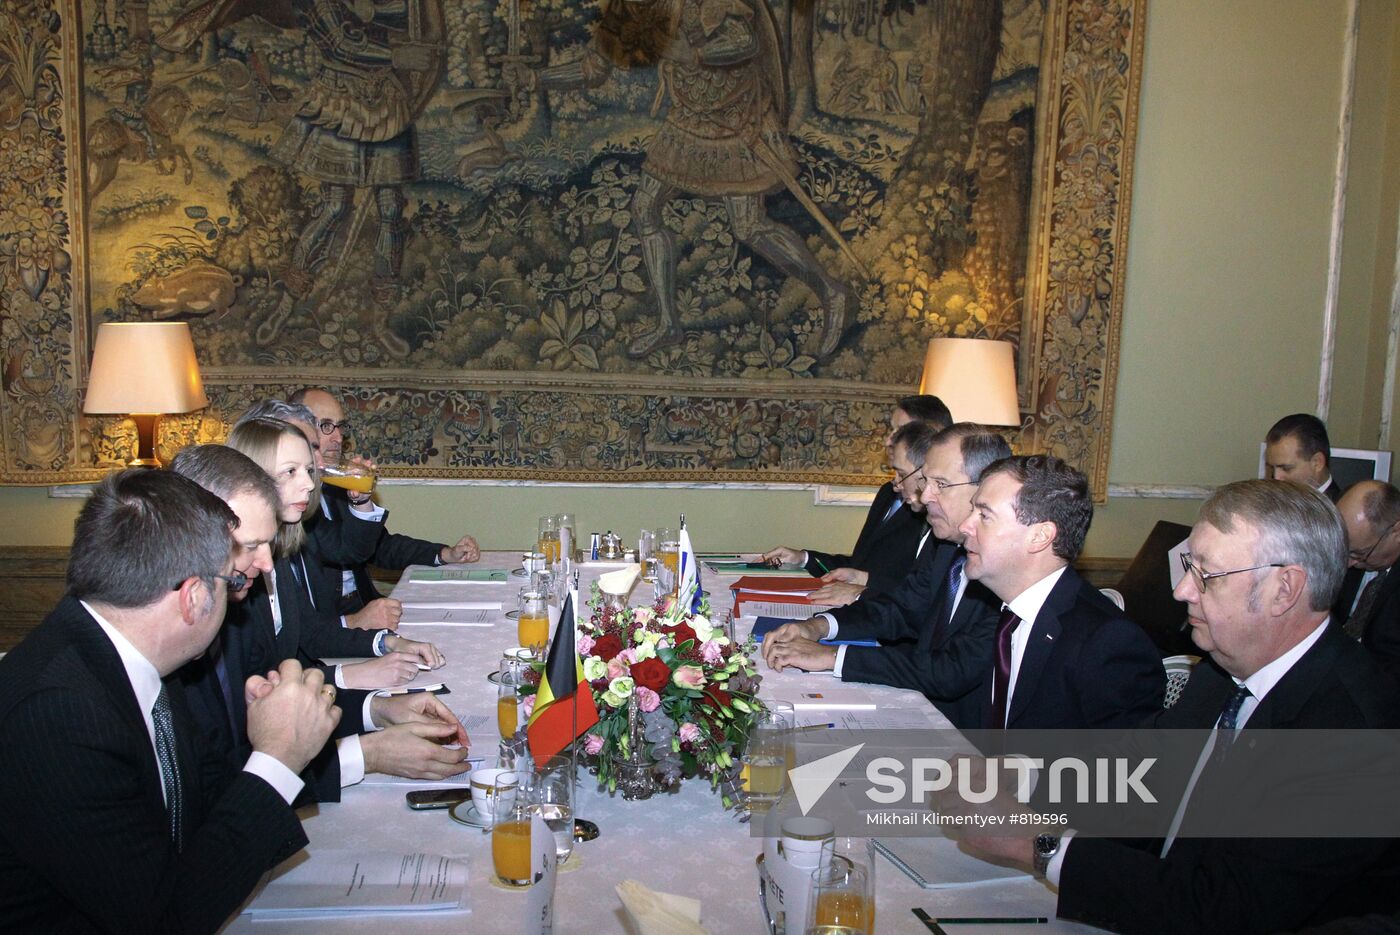 Dmitry Medvedev's official visit to Belgium